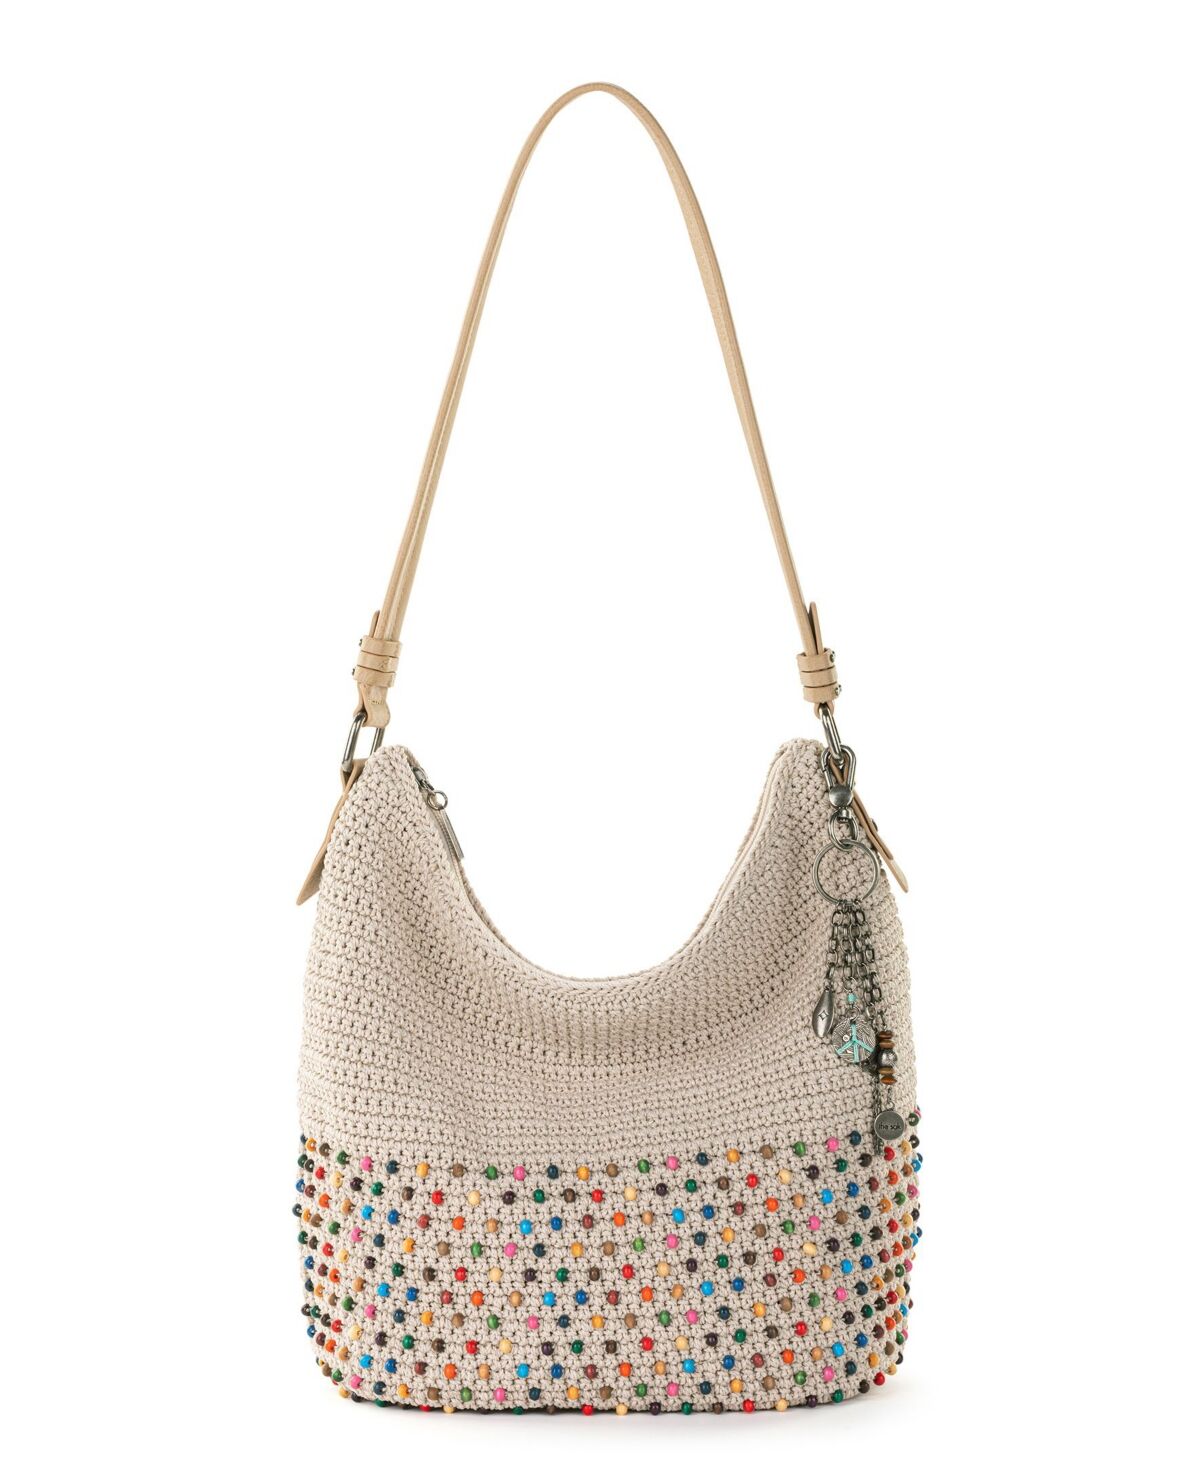 The Sak Sequoia Crochet Hobo Medium Handbag - Ecru Multi Beads